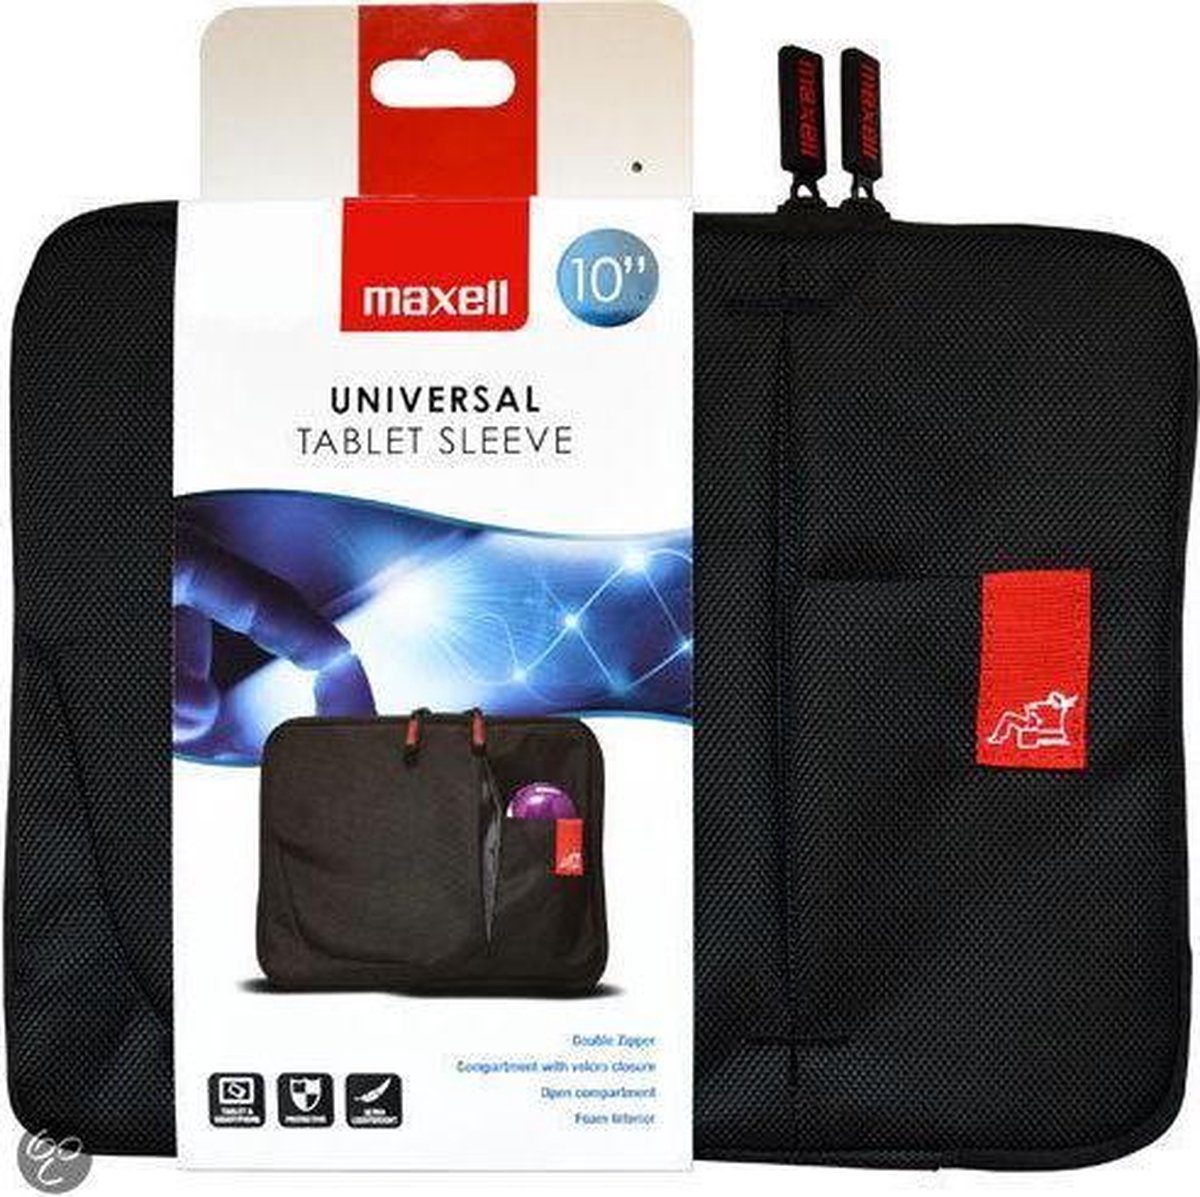 Maxell Universal Tablet Sleeve 10